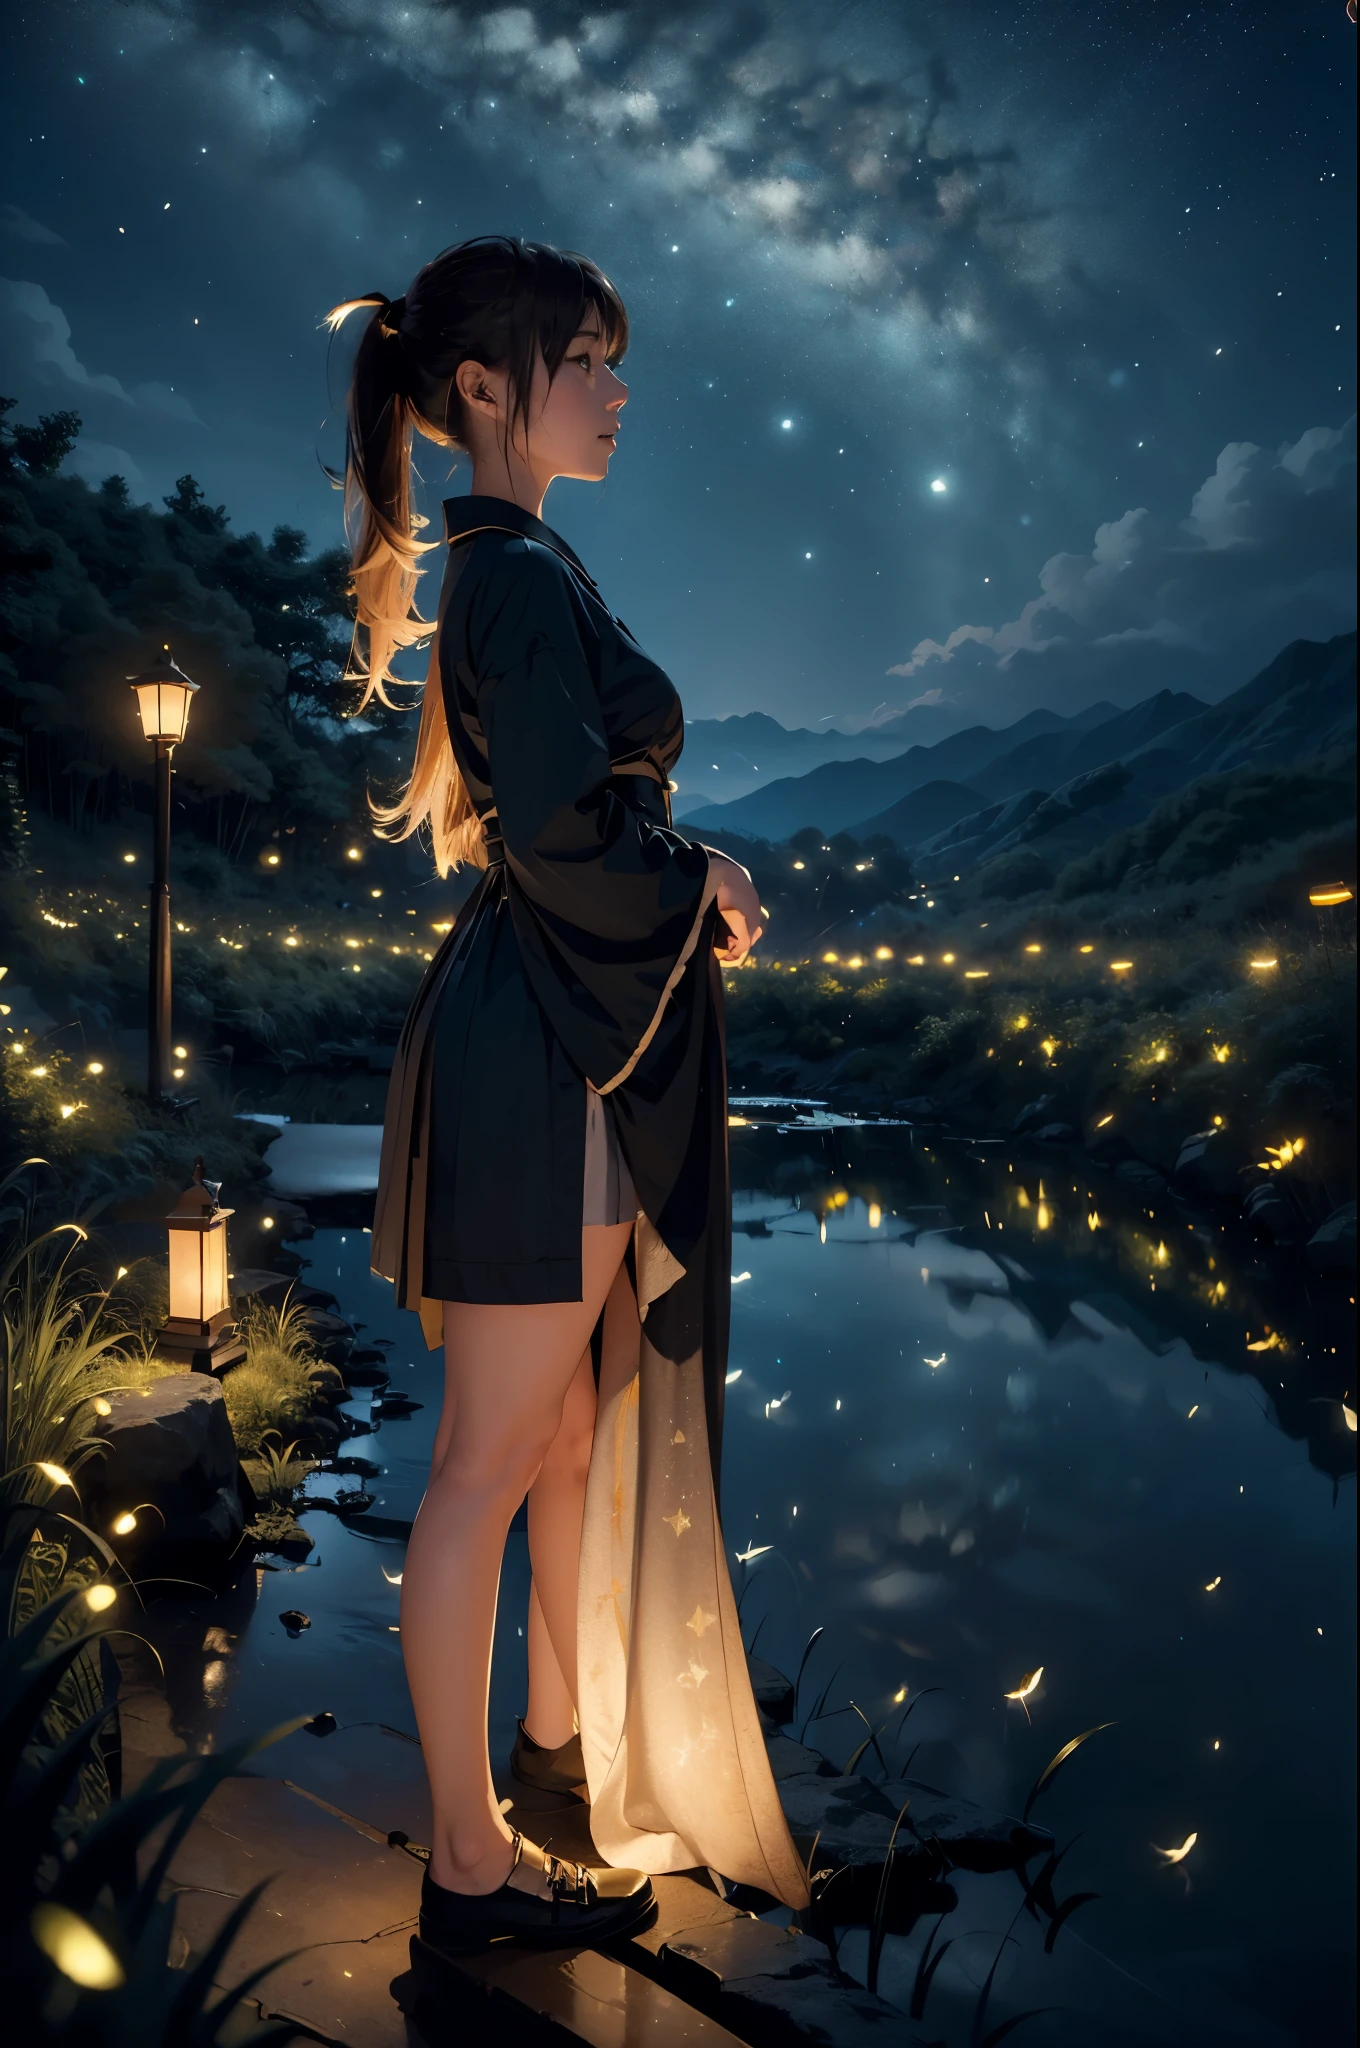 (masterpiece),4k, (ultra realistic), (best quality), 1girl, a beautiful japanese slim girl standing, beautiful face, night, stars, (long ponytail), (far view), black stocking, full body, stars,many fireflies around , mountain